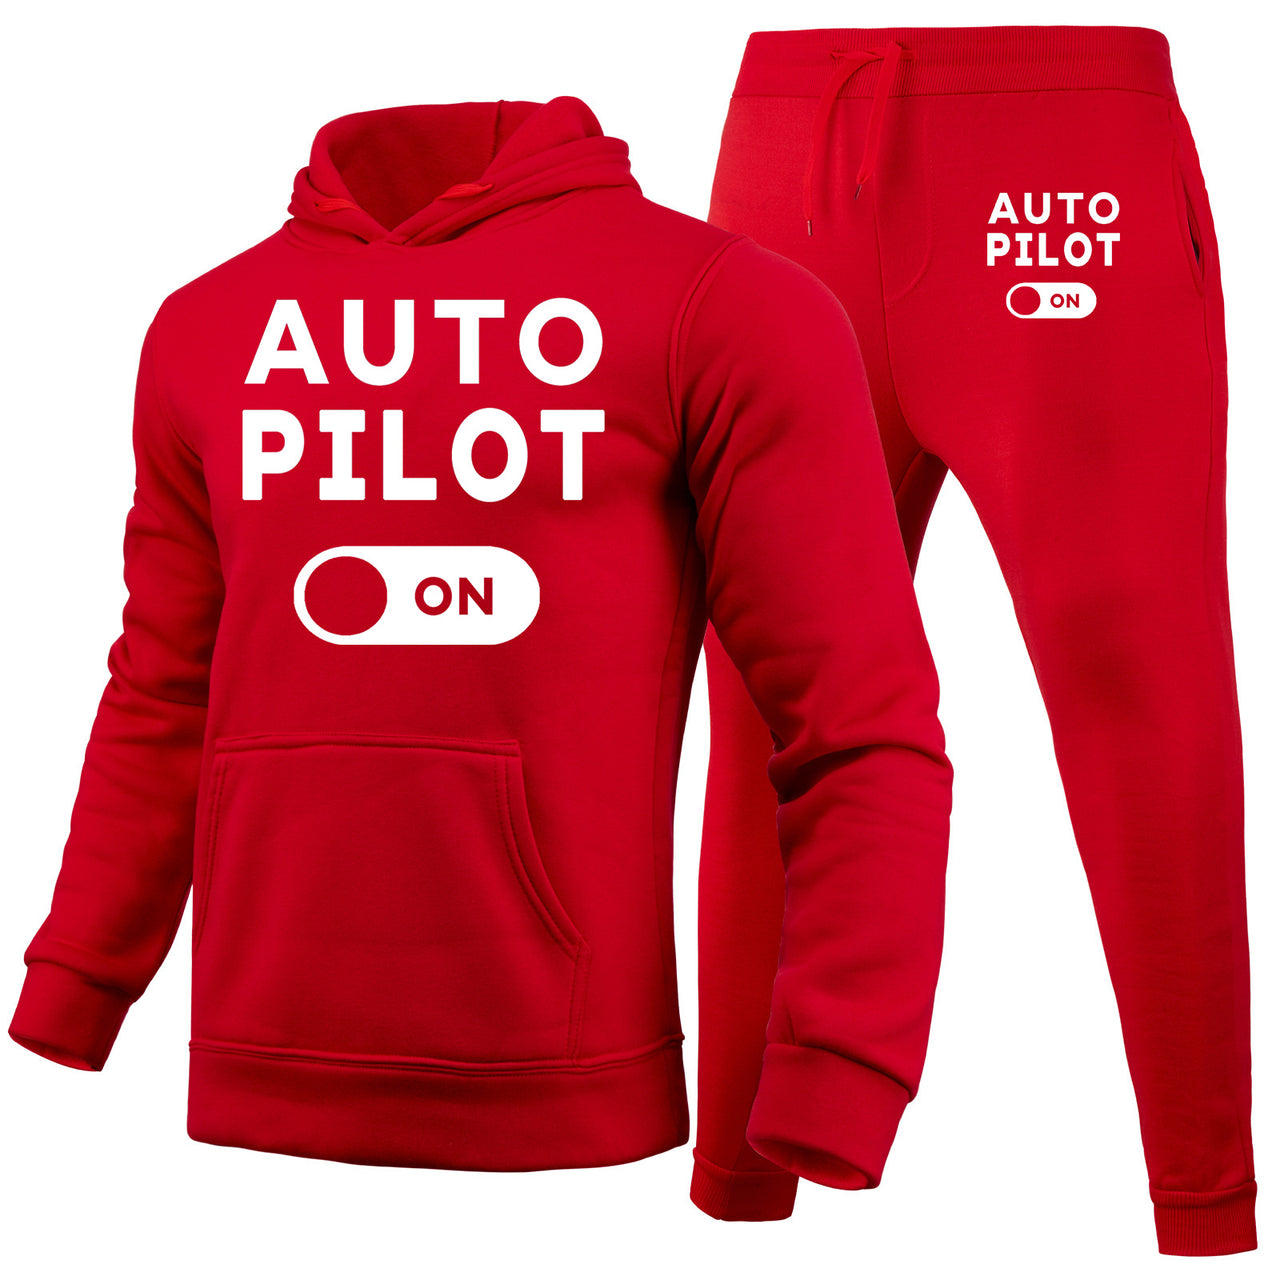 Auto Pilot ON Designed Hoodies & Sweatpants Set